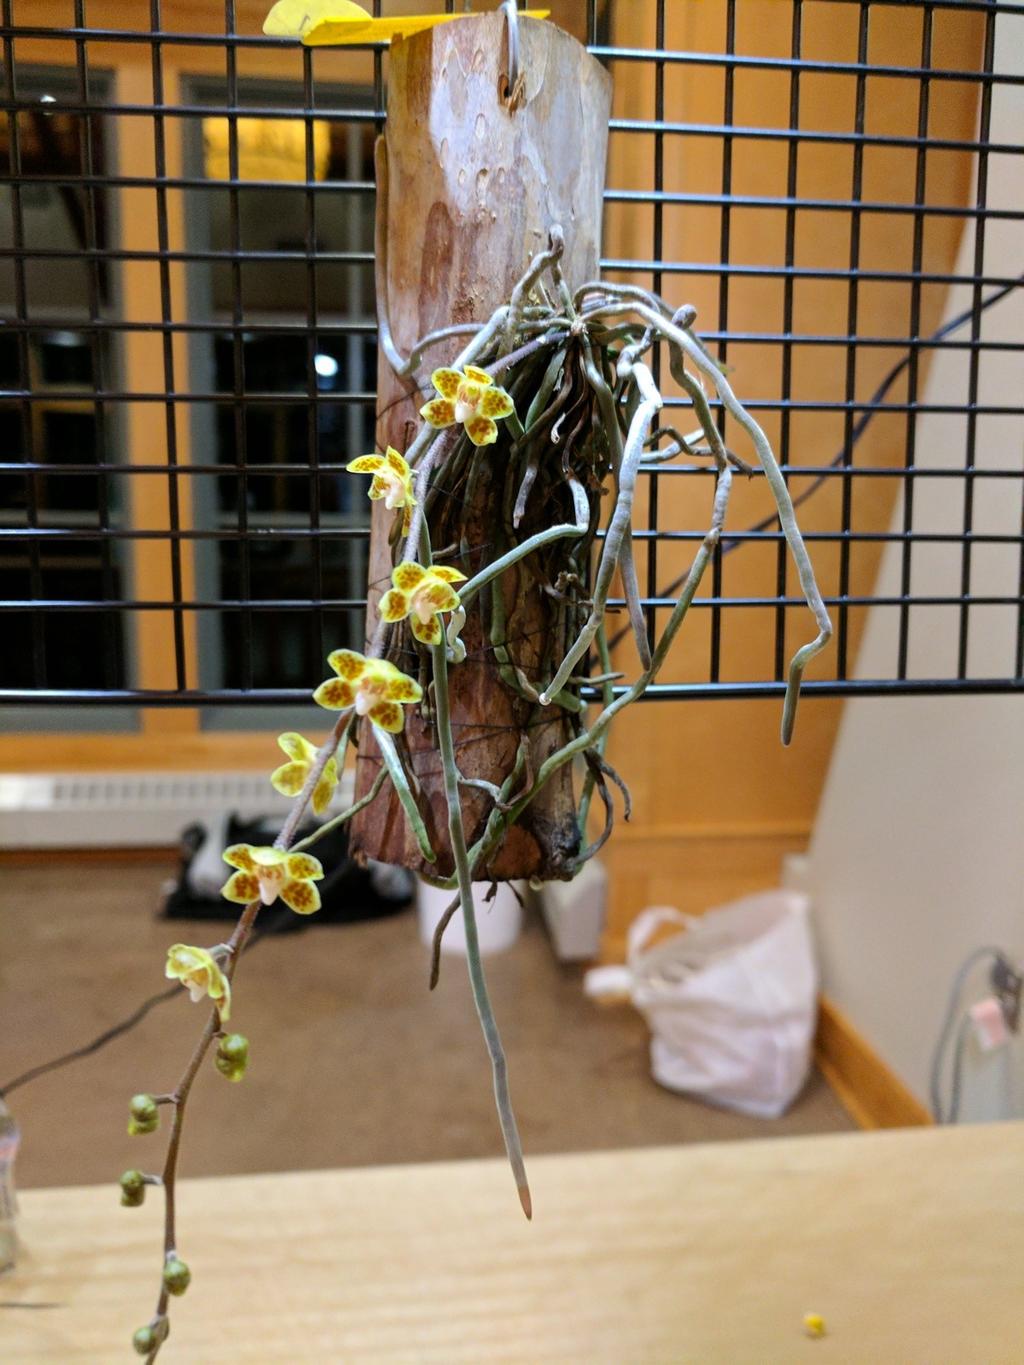 Bulbophyllum refractum Whirligig CHM/AOS, grown